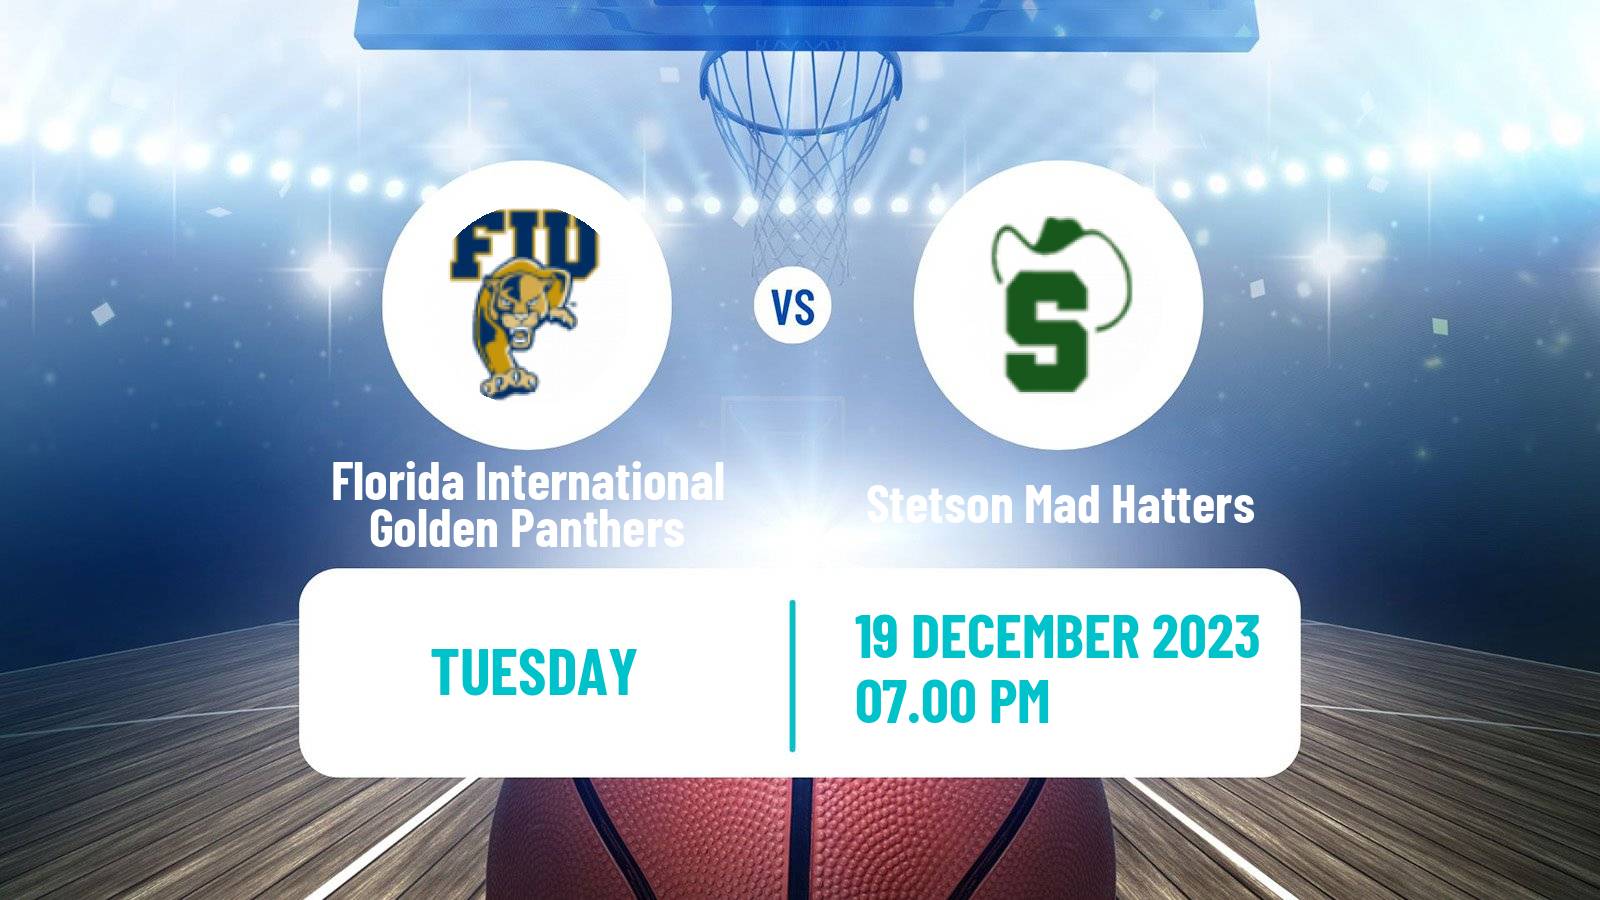 Basketball NCAA College Basketball Florida International Golden Panthers - Stetson Mad Hatters